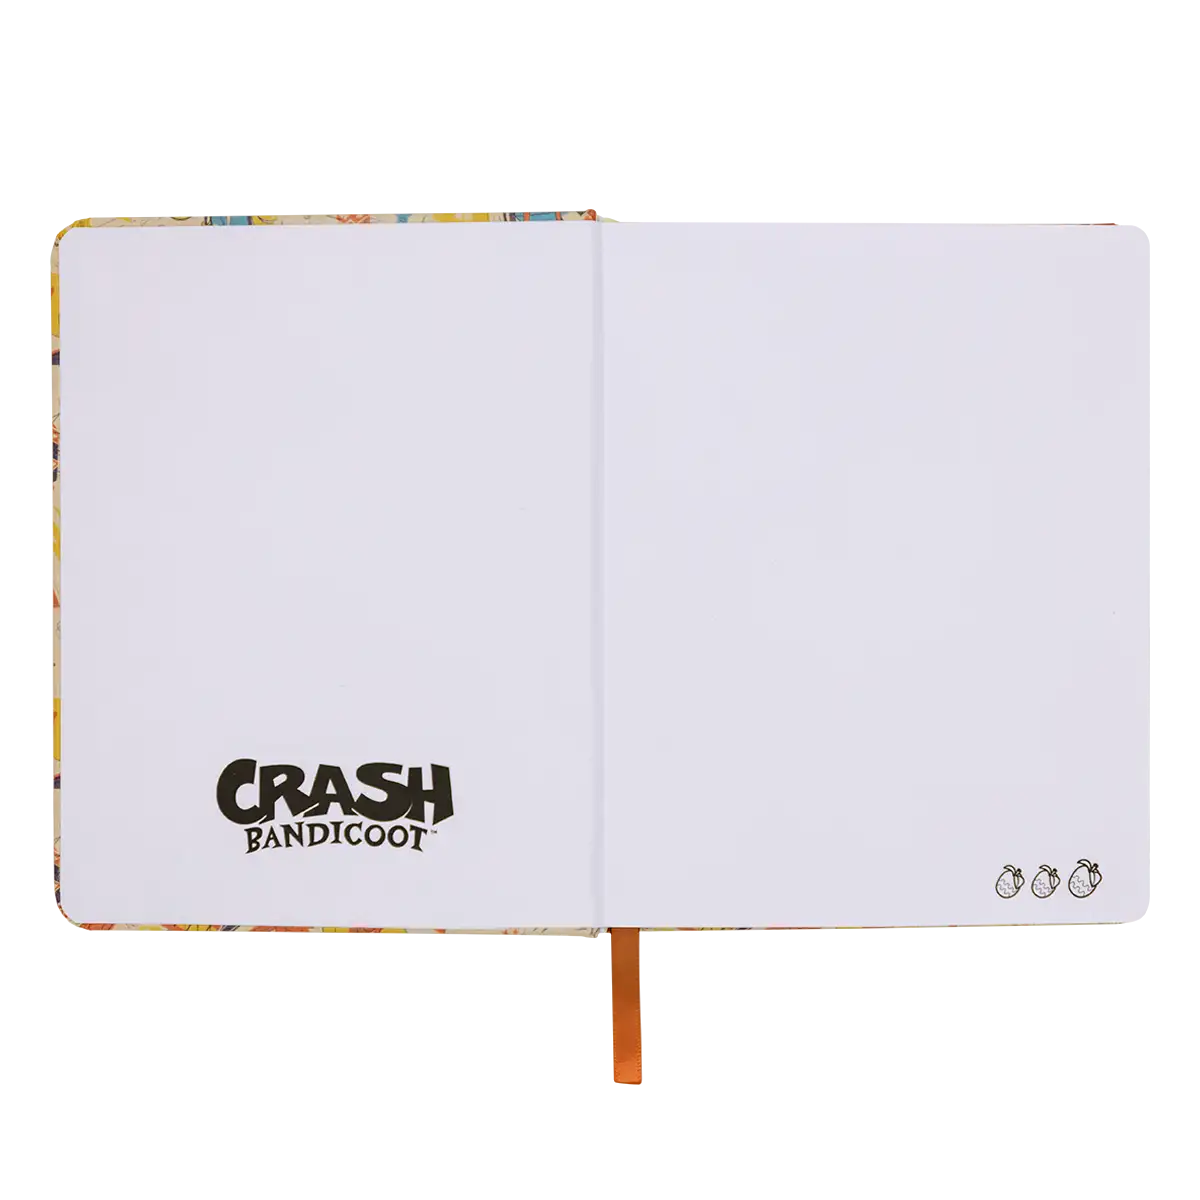 Crash Bandicoot Notebook "Racer" Image 4